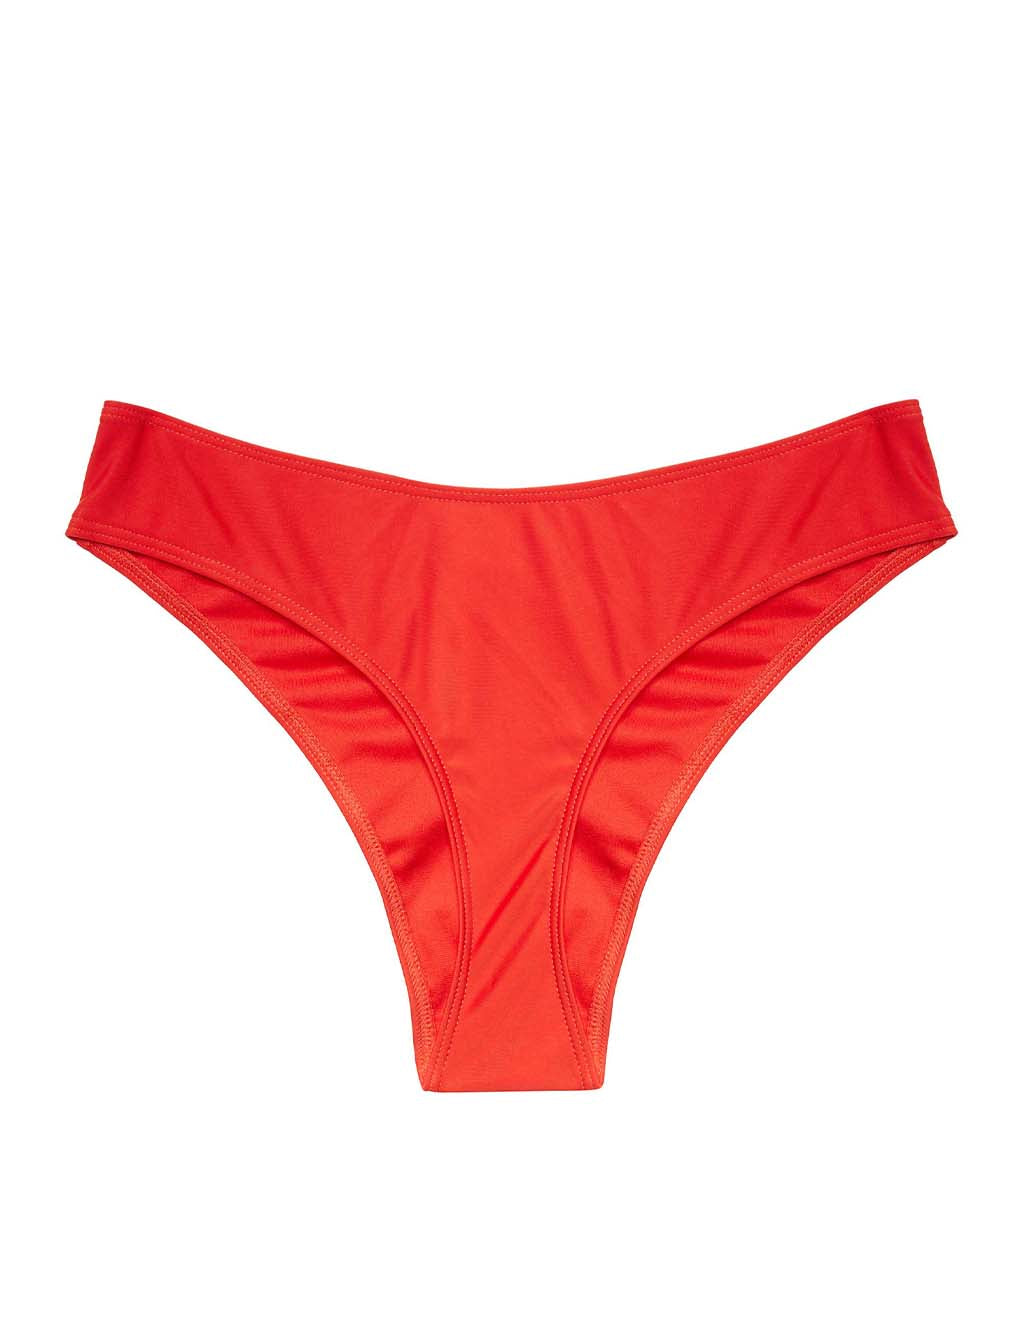 HUSTLER Cheeky Bikini Shortie- Red- Front Main